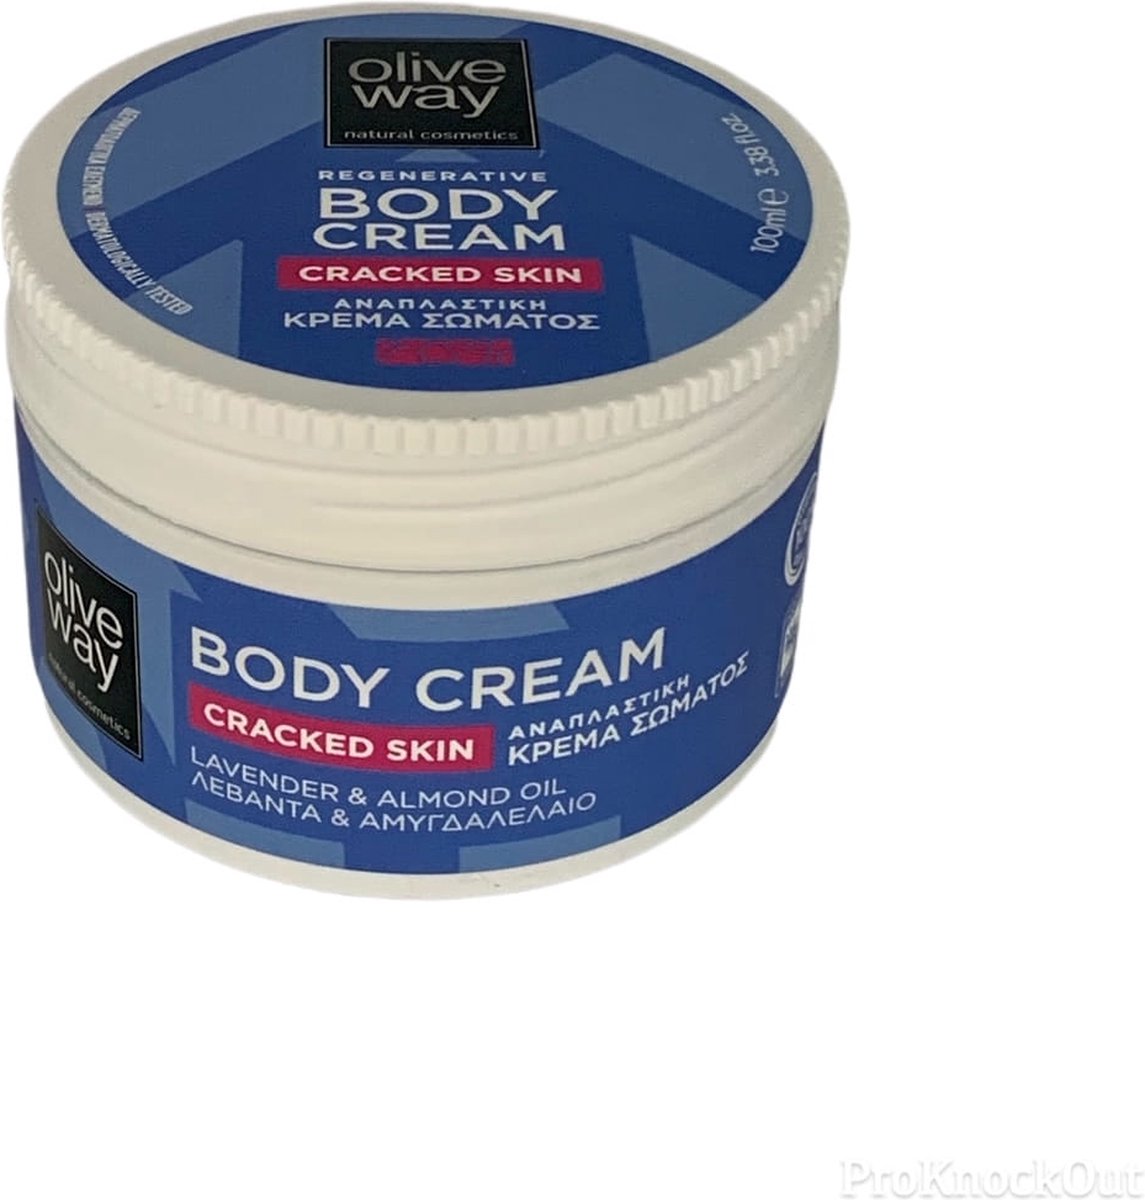 Oliveway Herstellende Body crème 'Cracked Skin' (100ml)